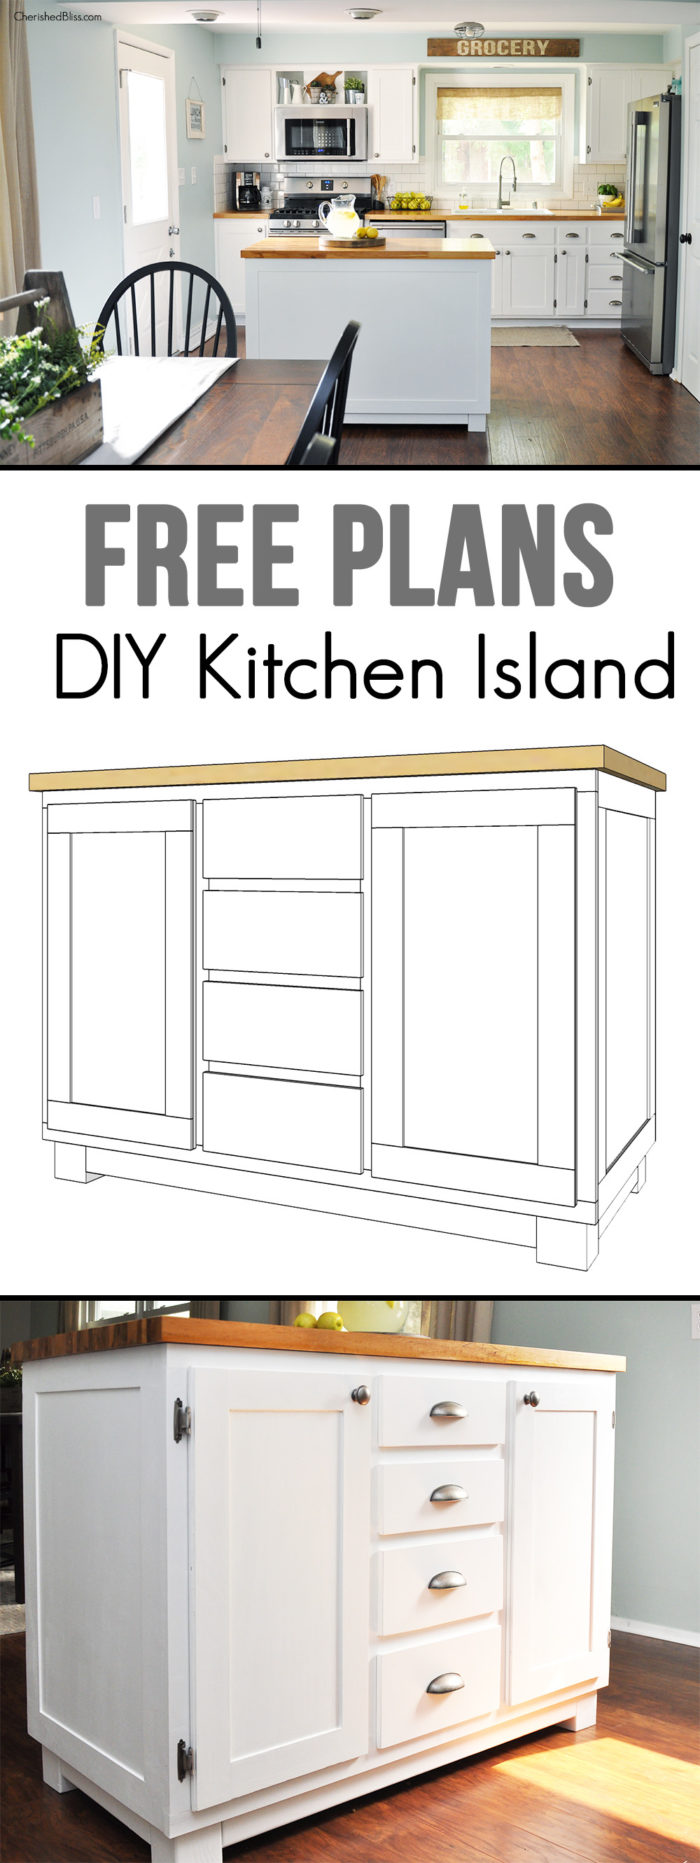 How to Build a DIY Kitchen Island - Cherished Bliss - How to Build a DIY Kitchen Island - Cherished Bliss -   15 diy Easy kitchen ideas